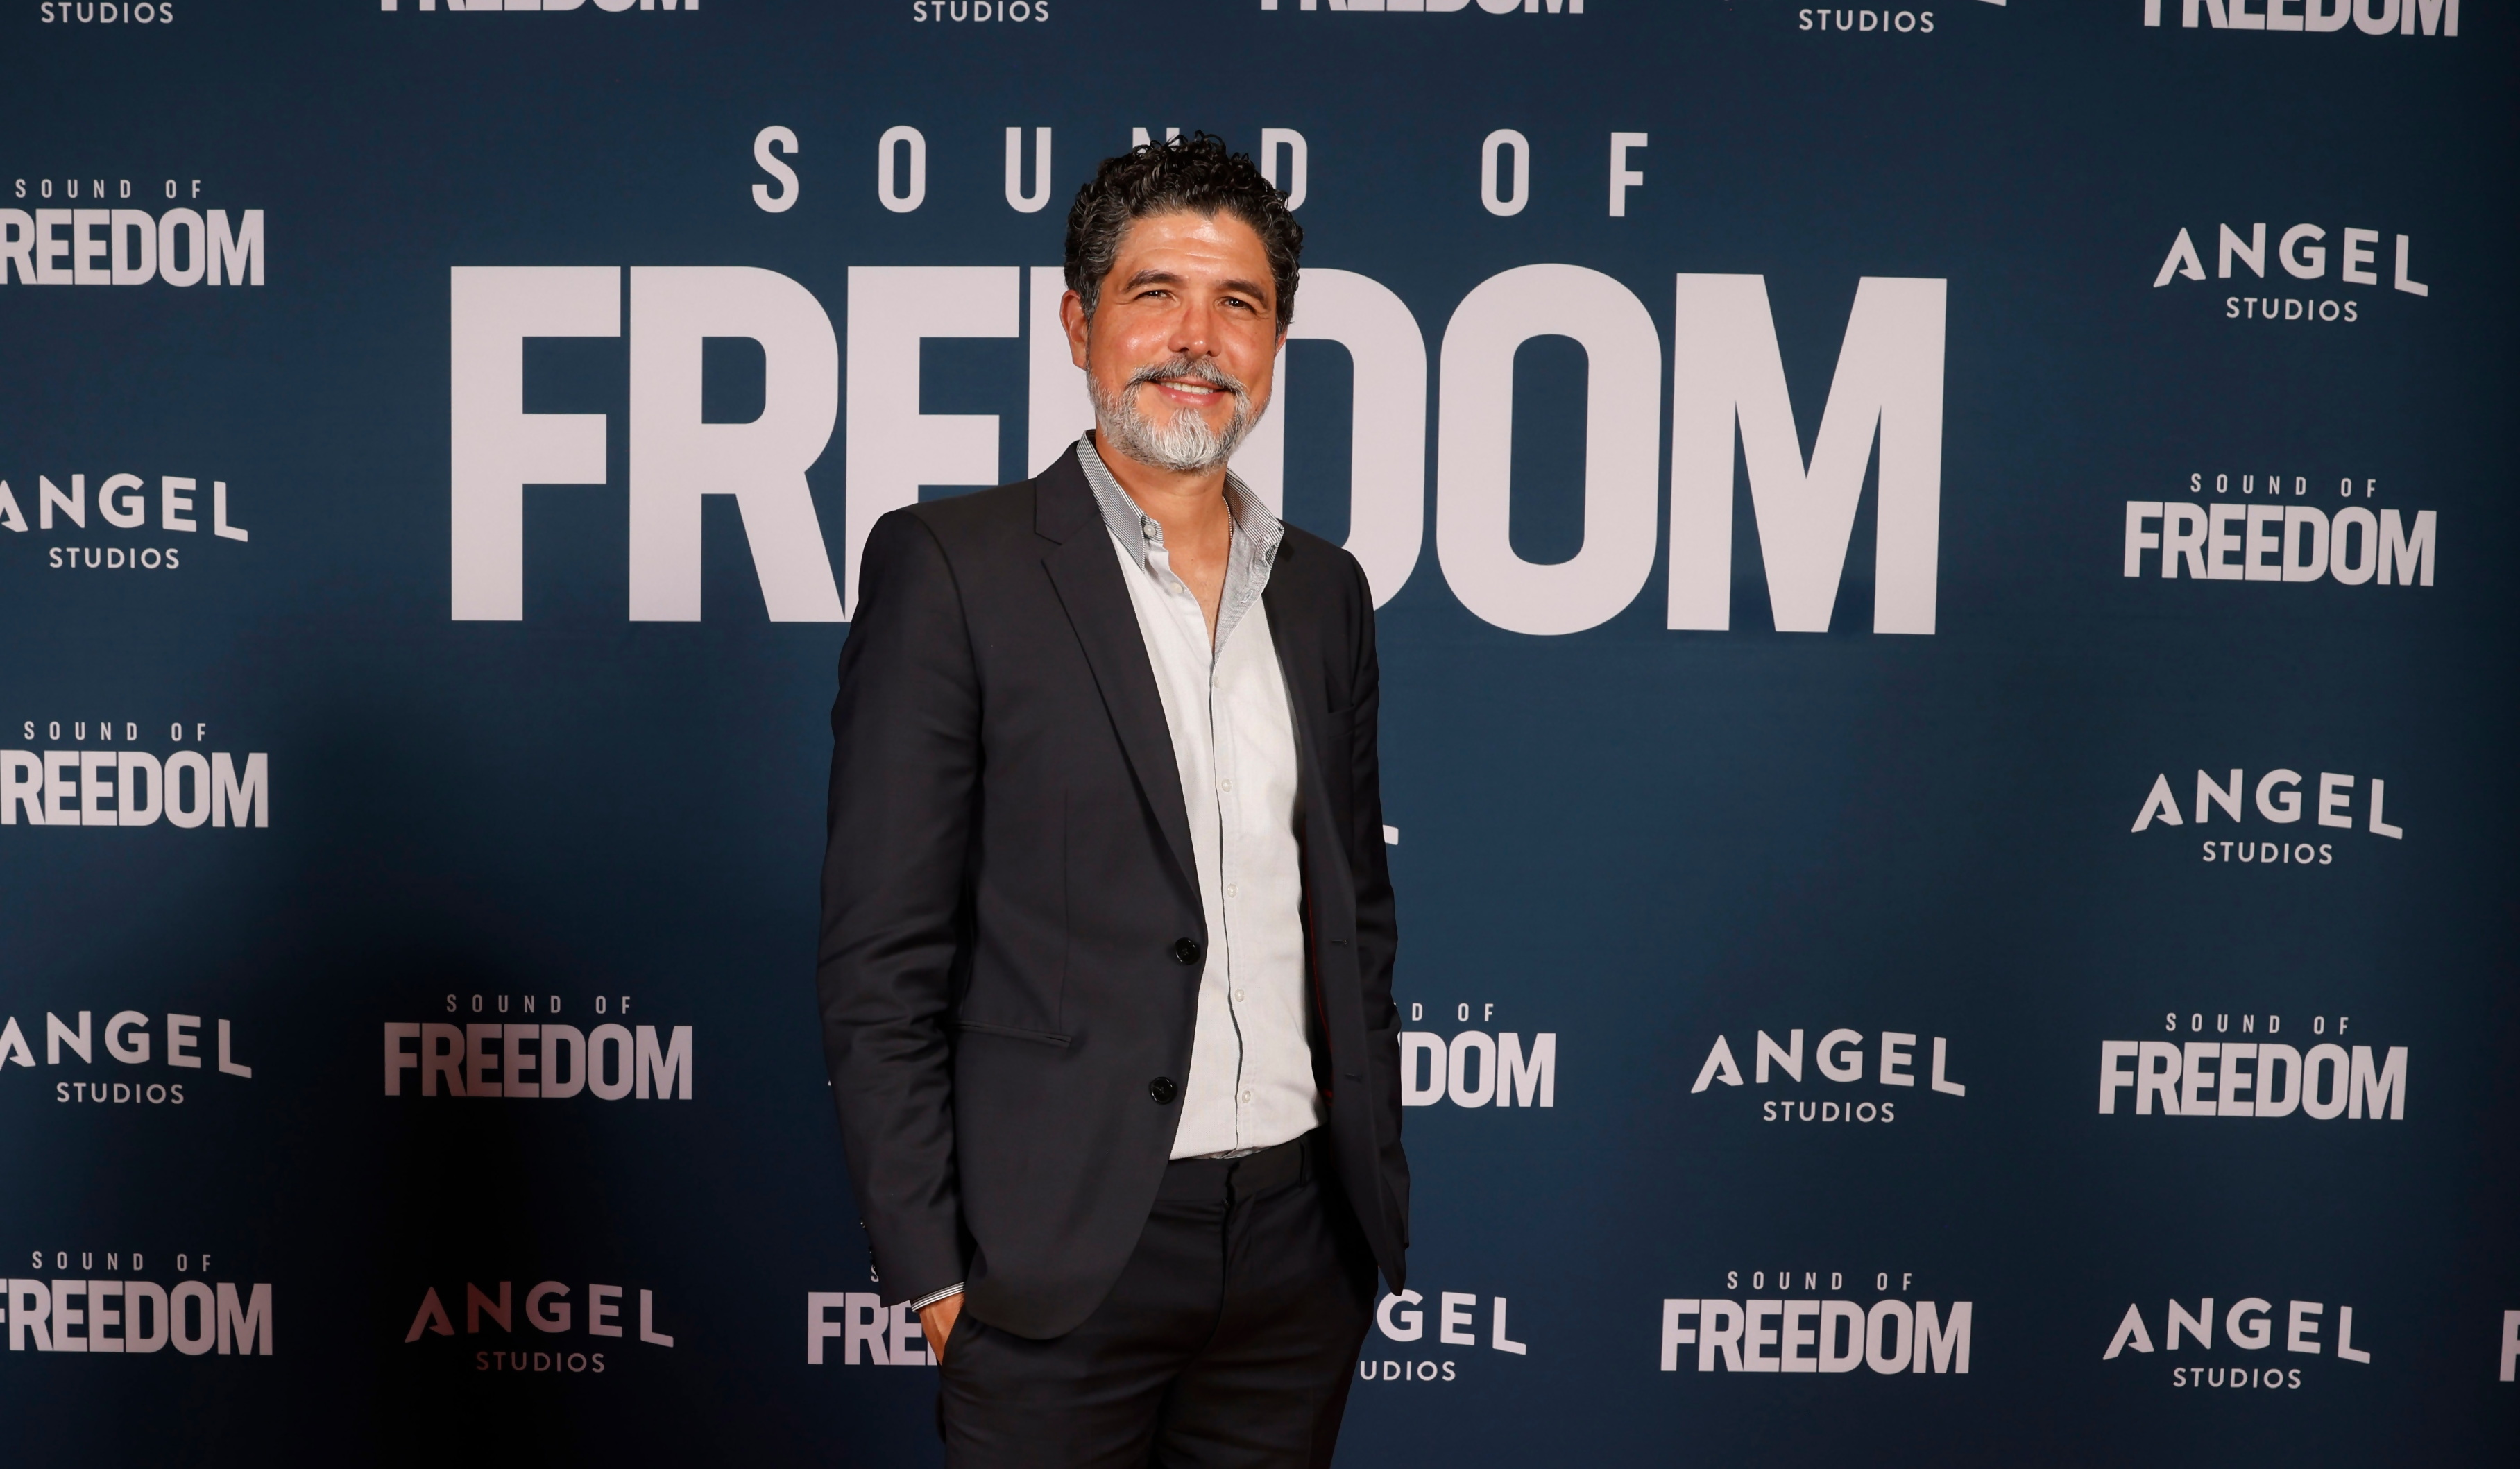 sound of freedom director alejando monteverde